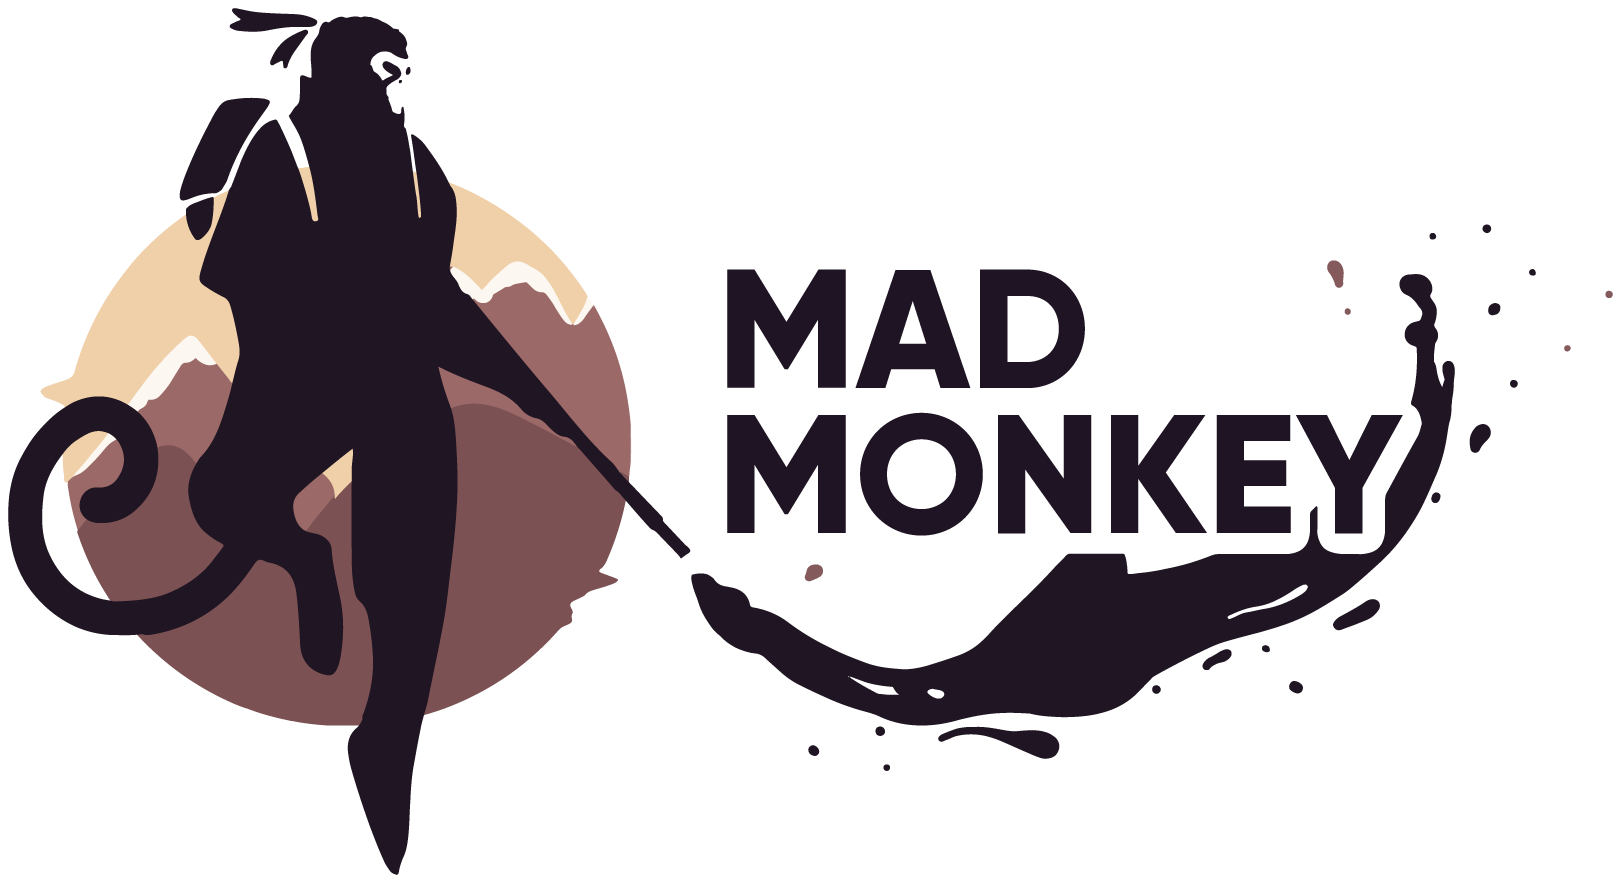 Mad monkeys